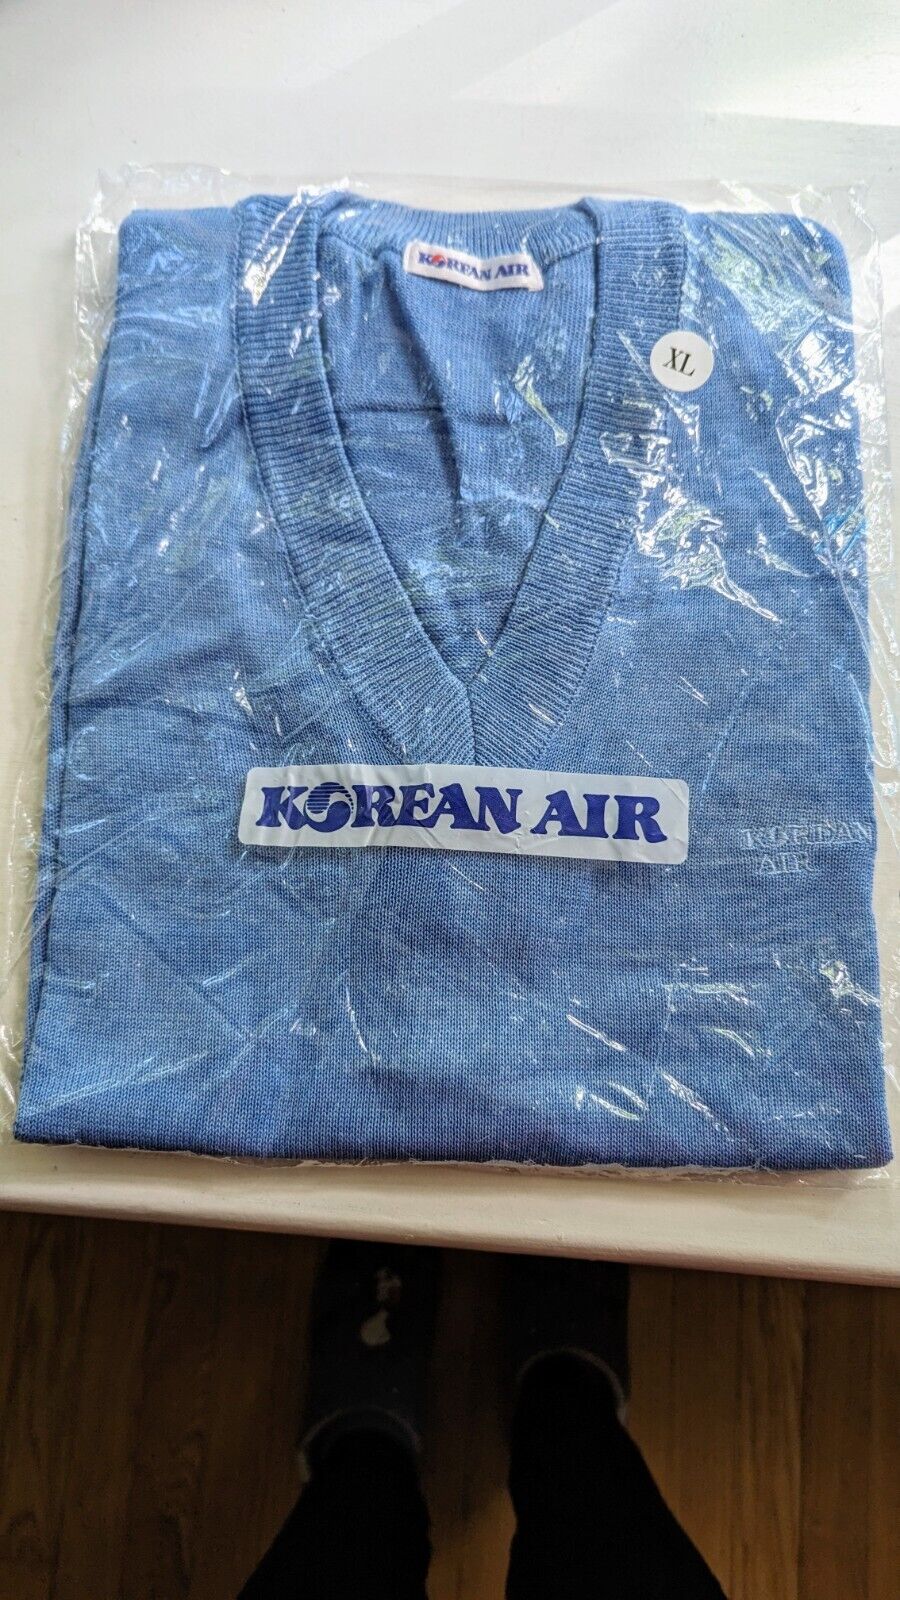 Korean Air Airlines Vintage Light Blue Airline Vest Size XL Never Opened in Bag